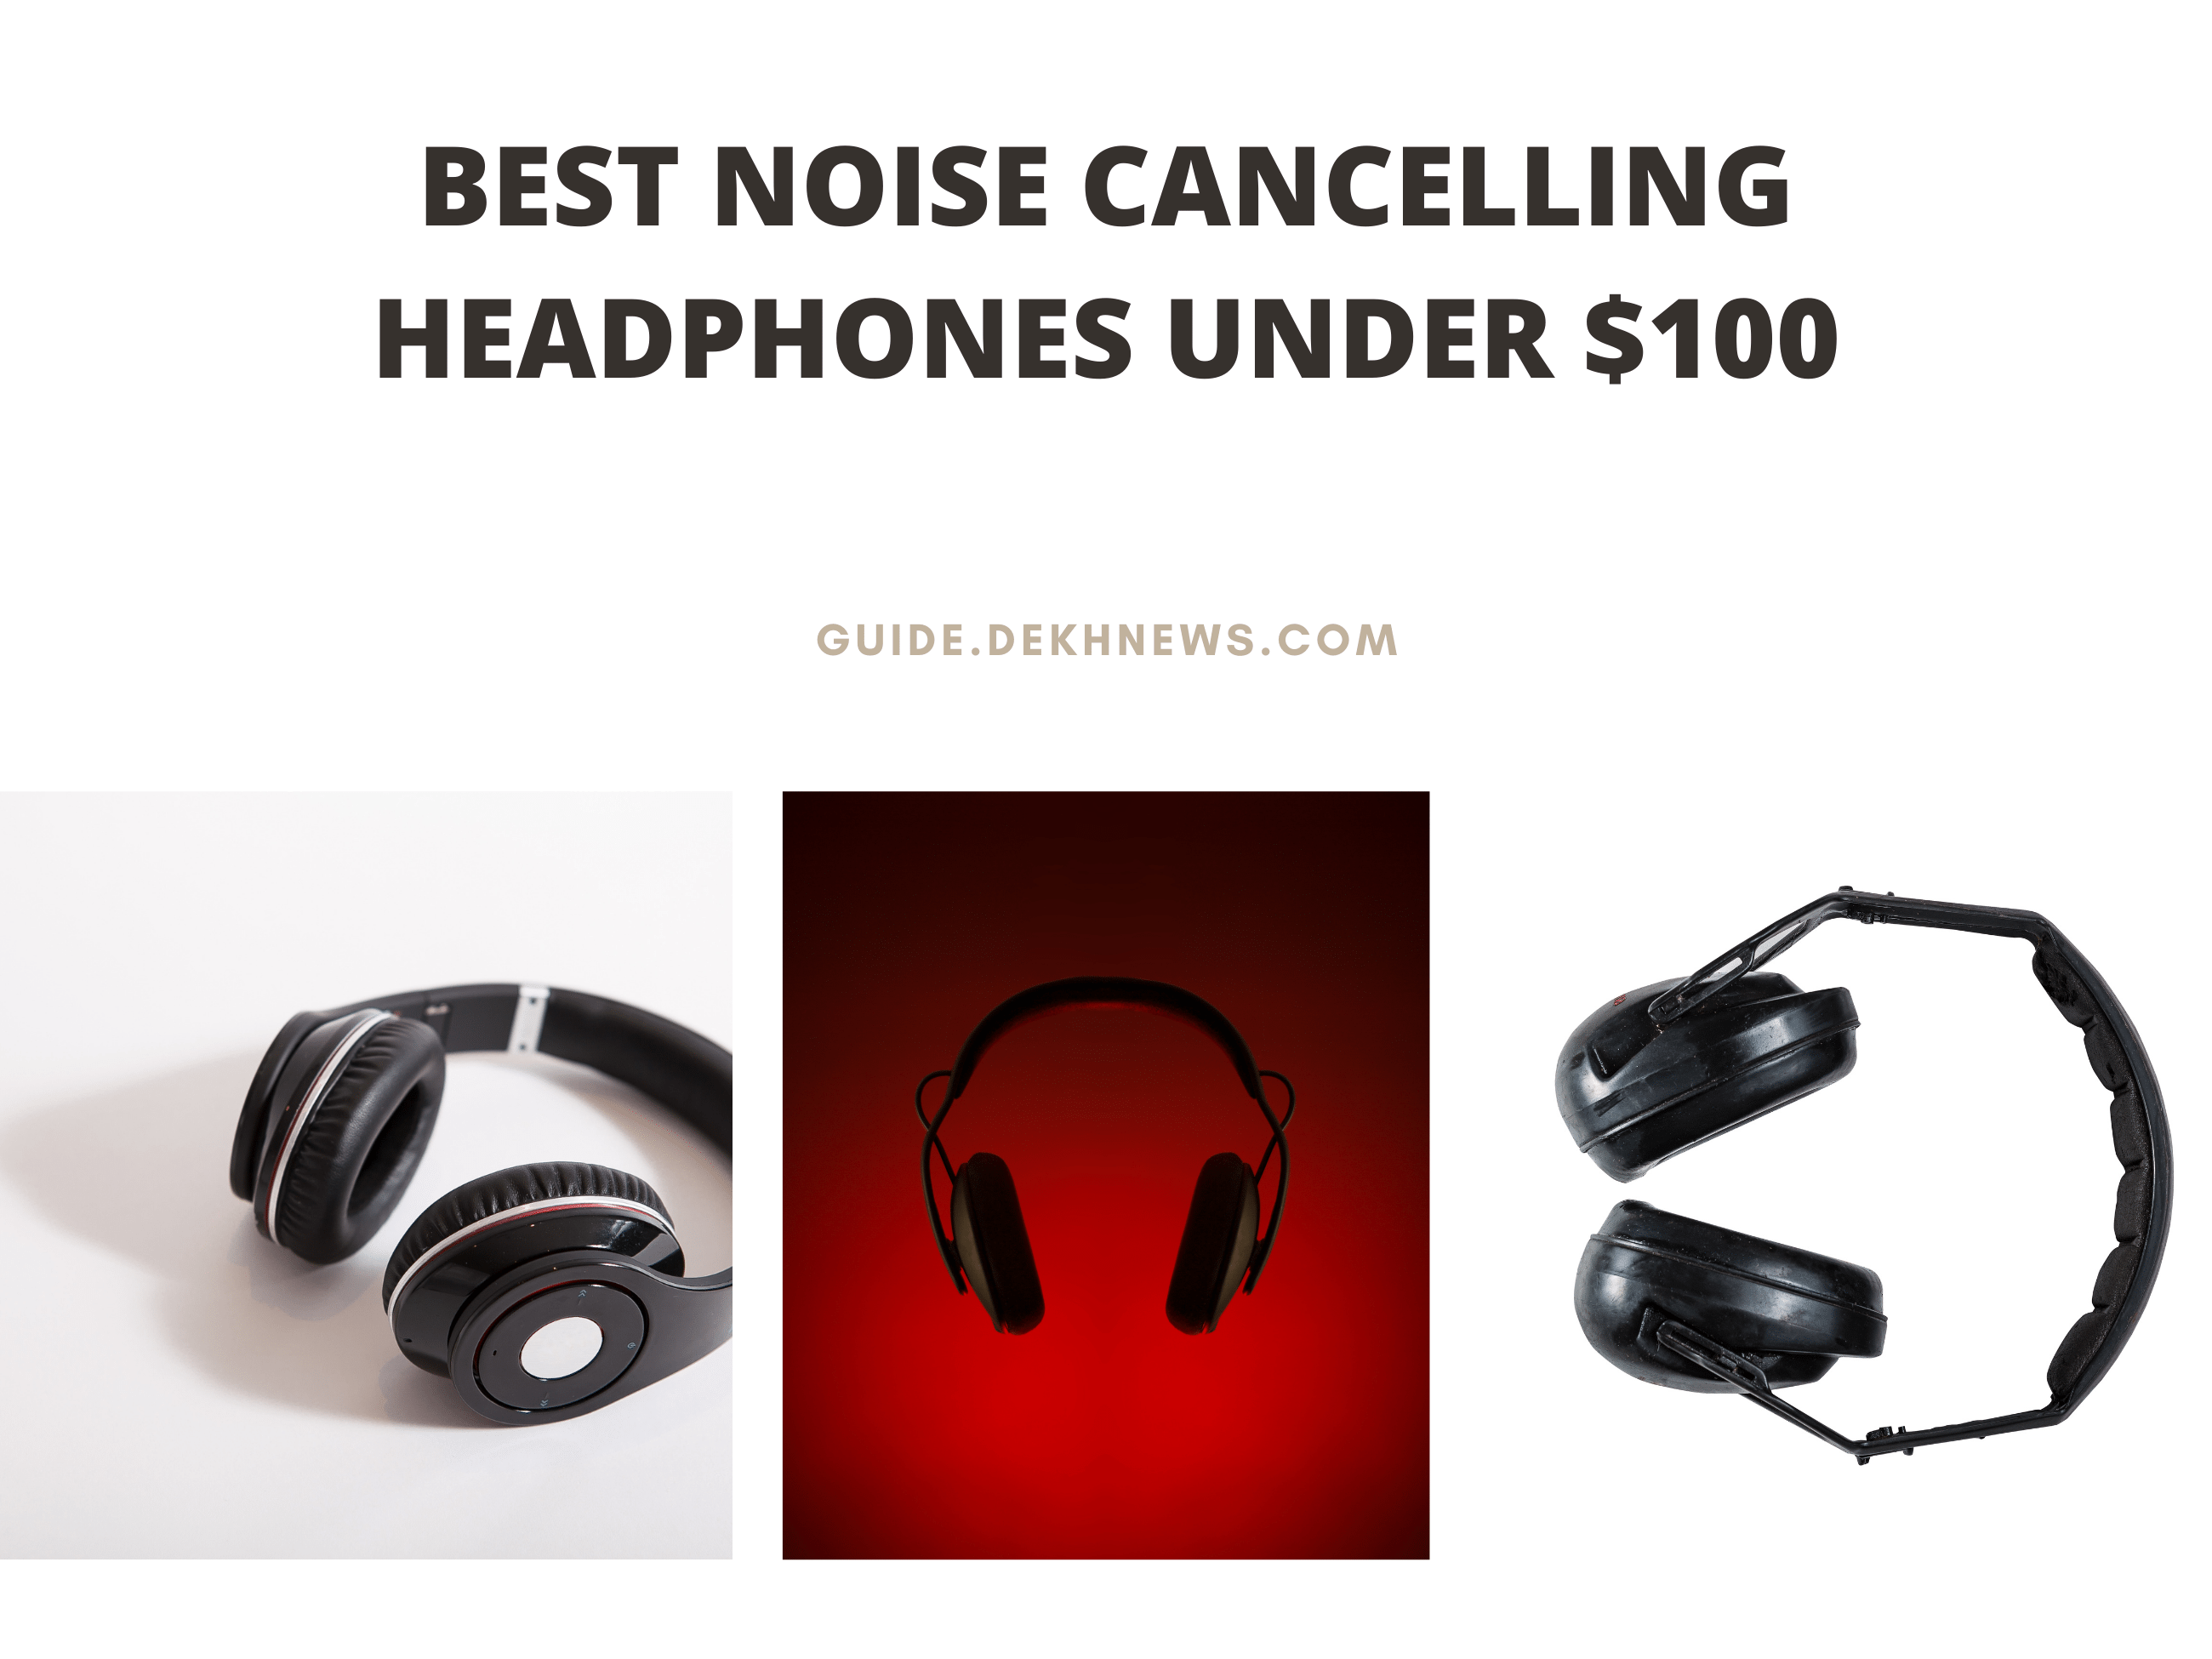 6 Best Noise Cancelling Headphones under $100 (2021 Reviews)